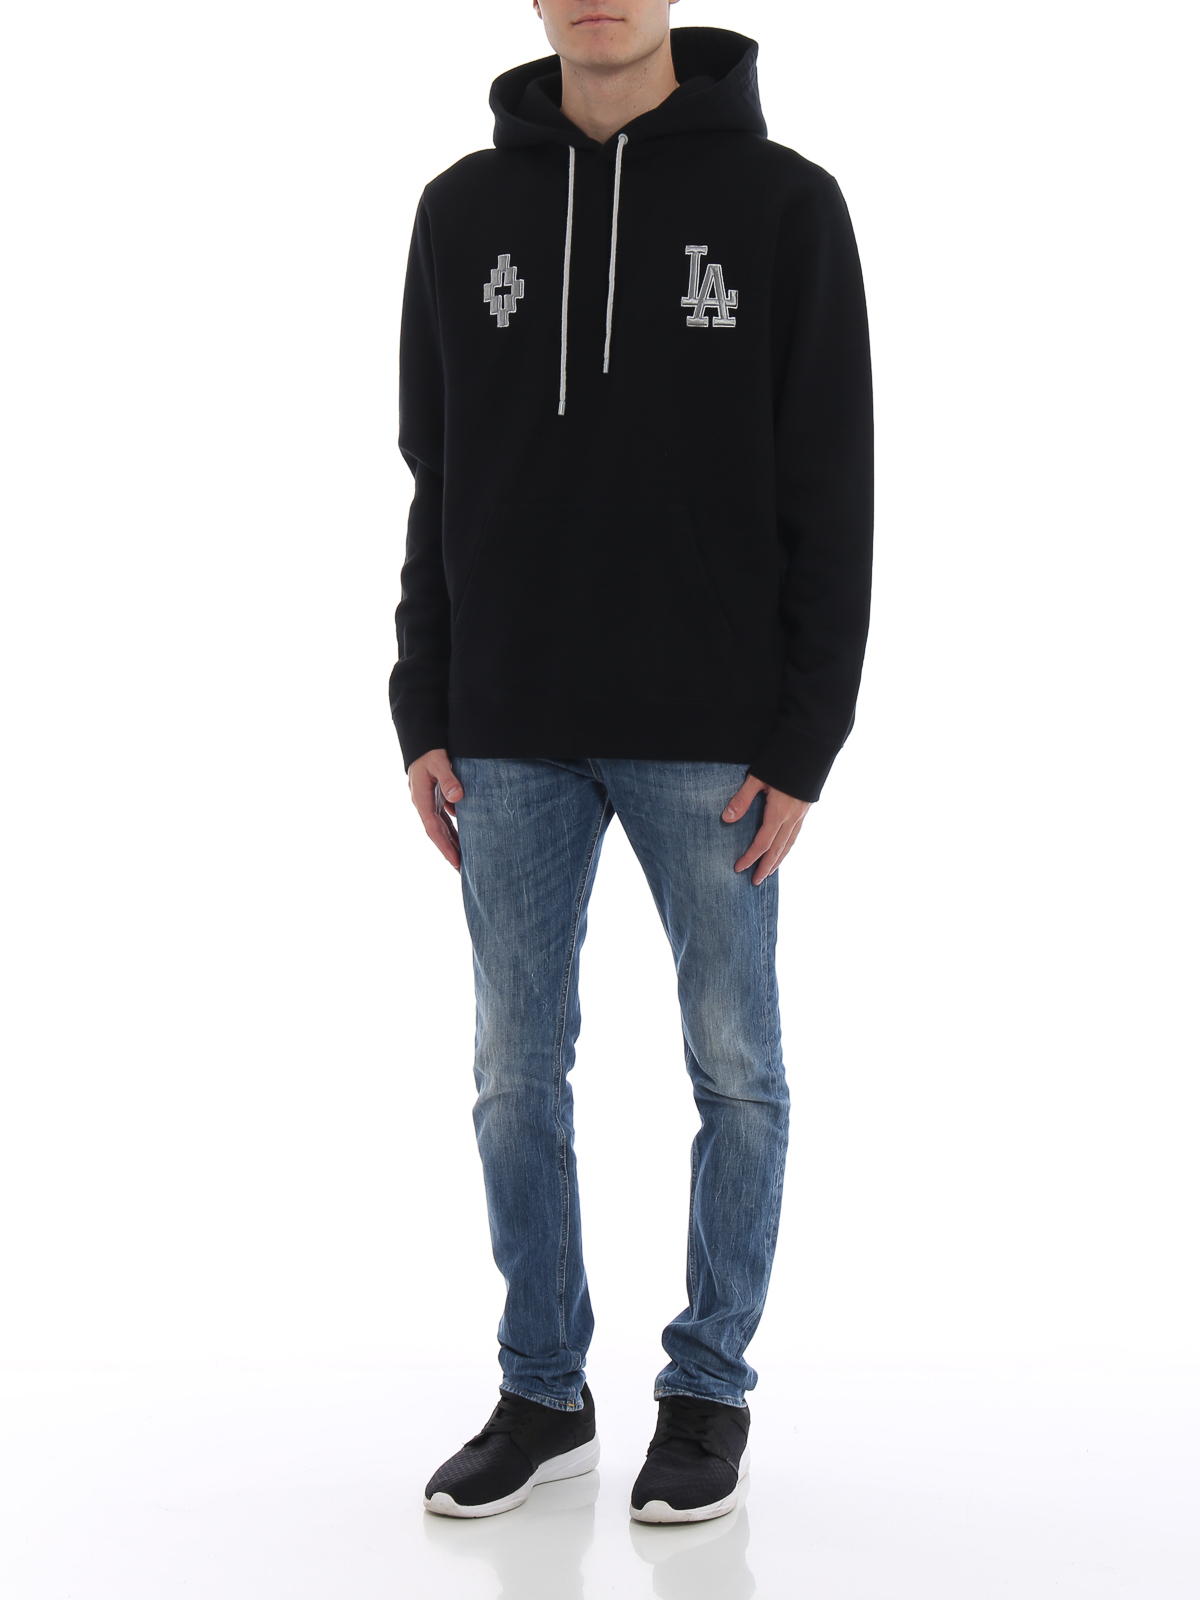 Sweatshirts & Sweaters Marcelo Burlon - Black and light grey LA Dodgers  hoodie - CMBB007F186730181006